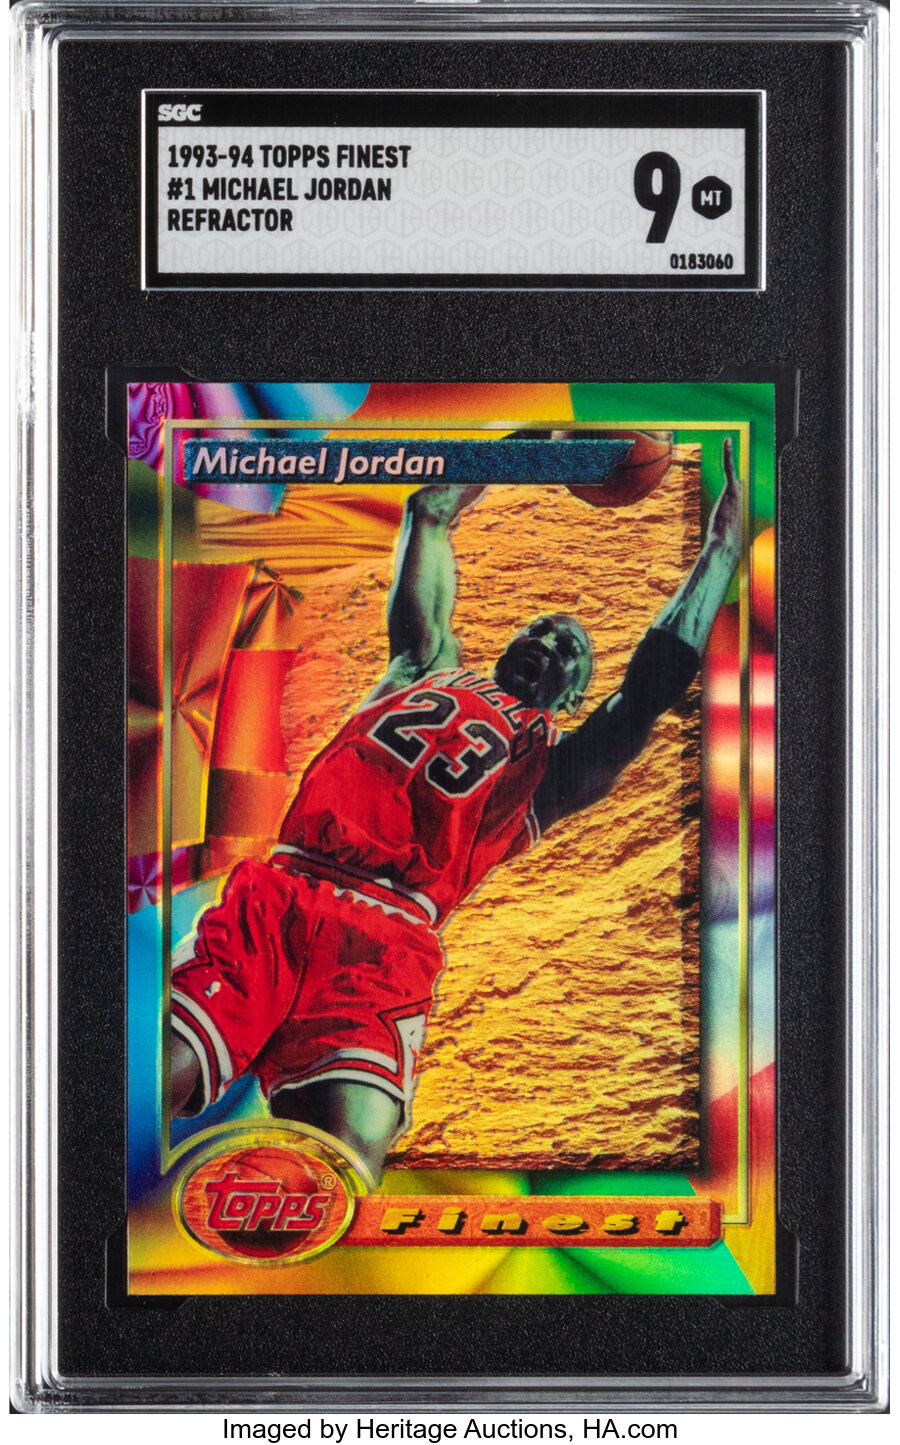 1993 Topps Finest Michael Jordan (Refractor) #1 SGC Mint 9